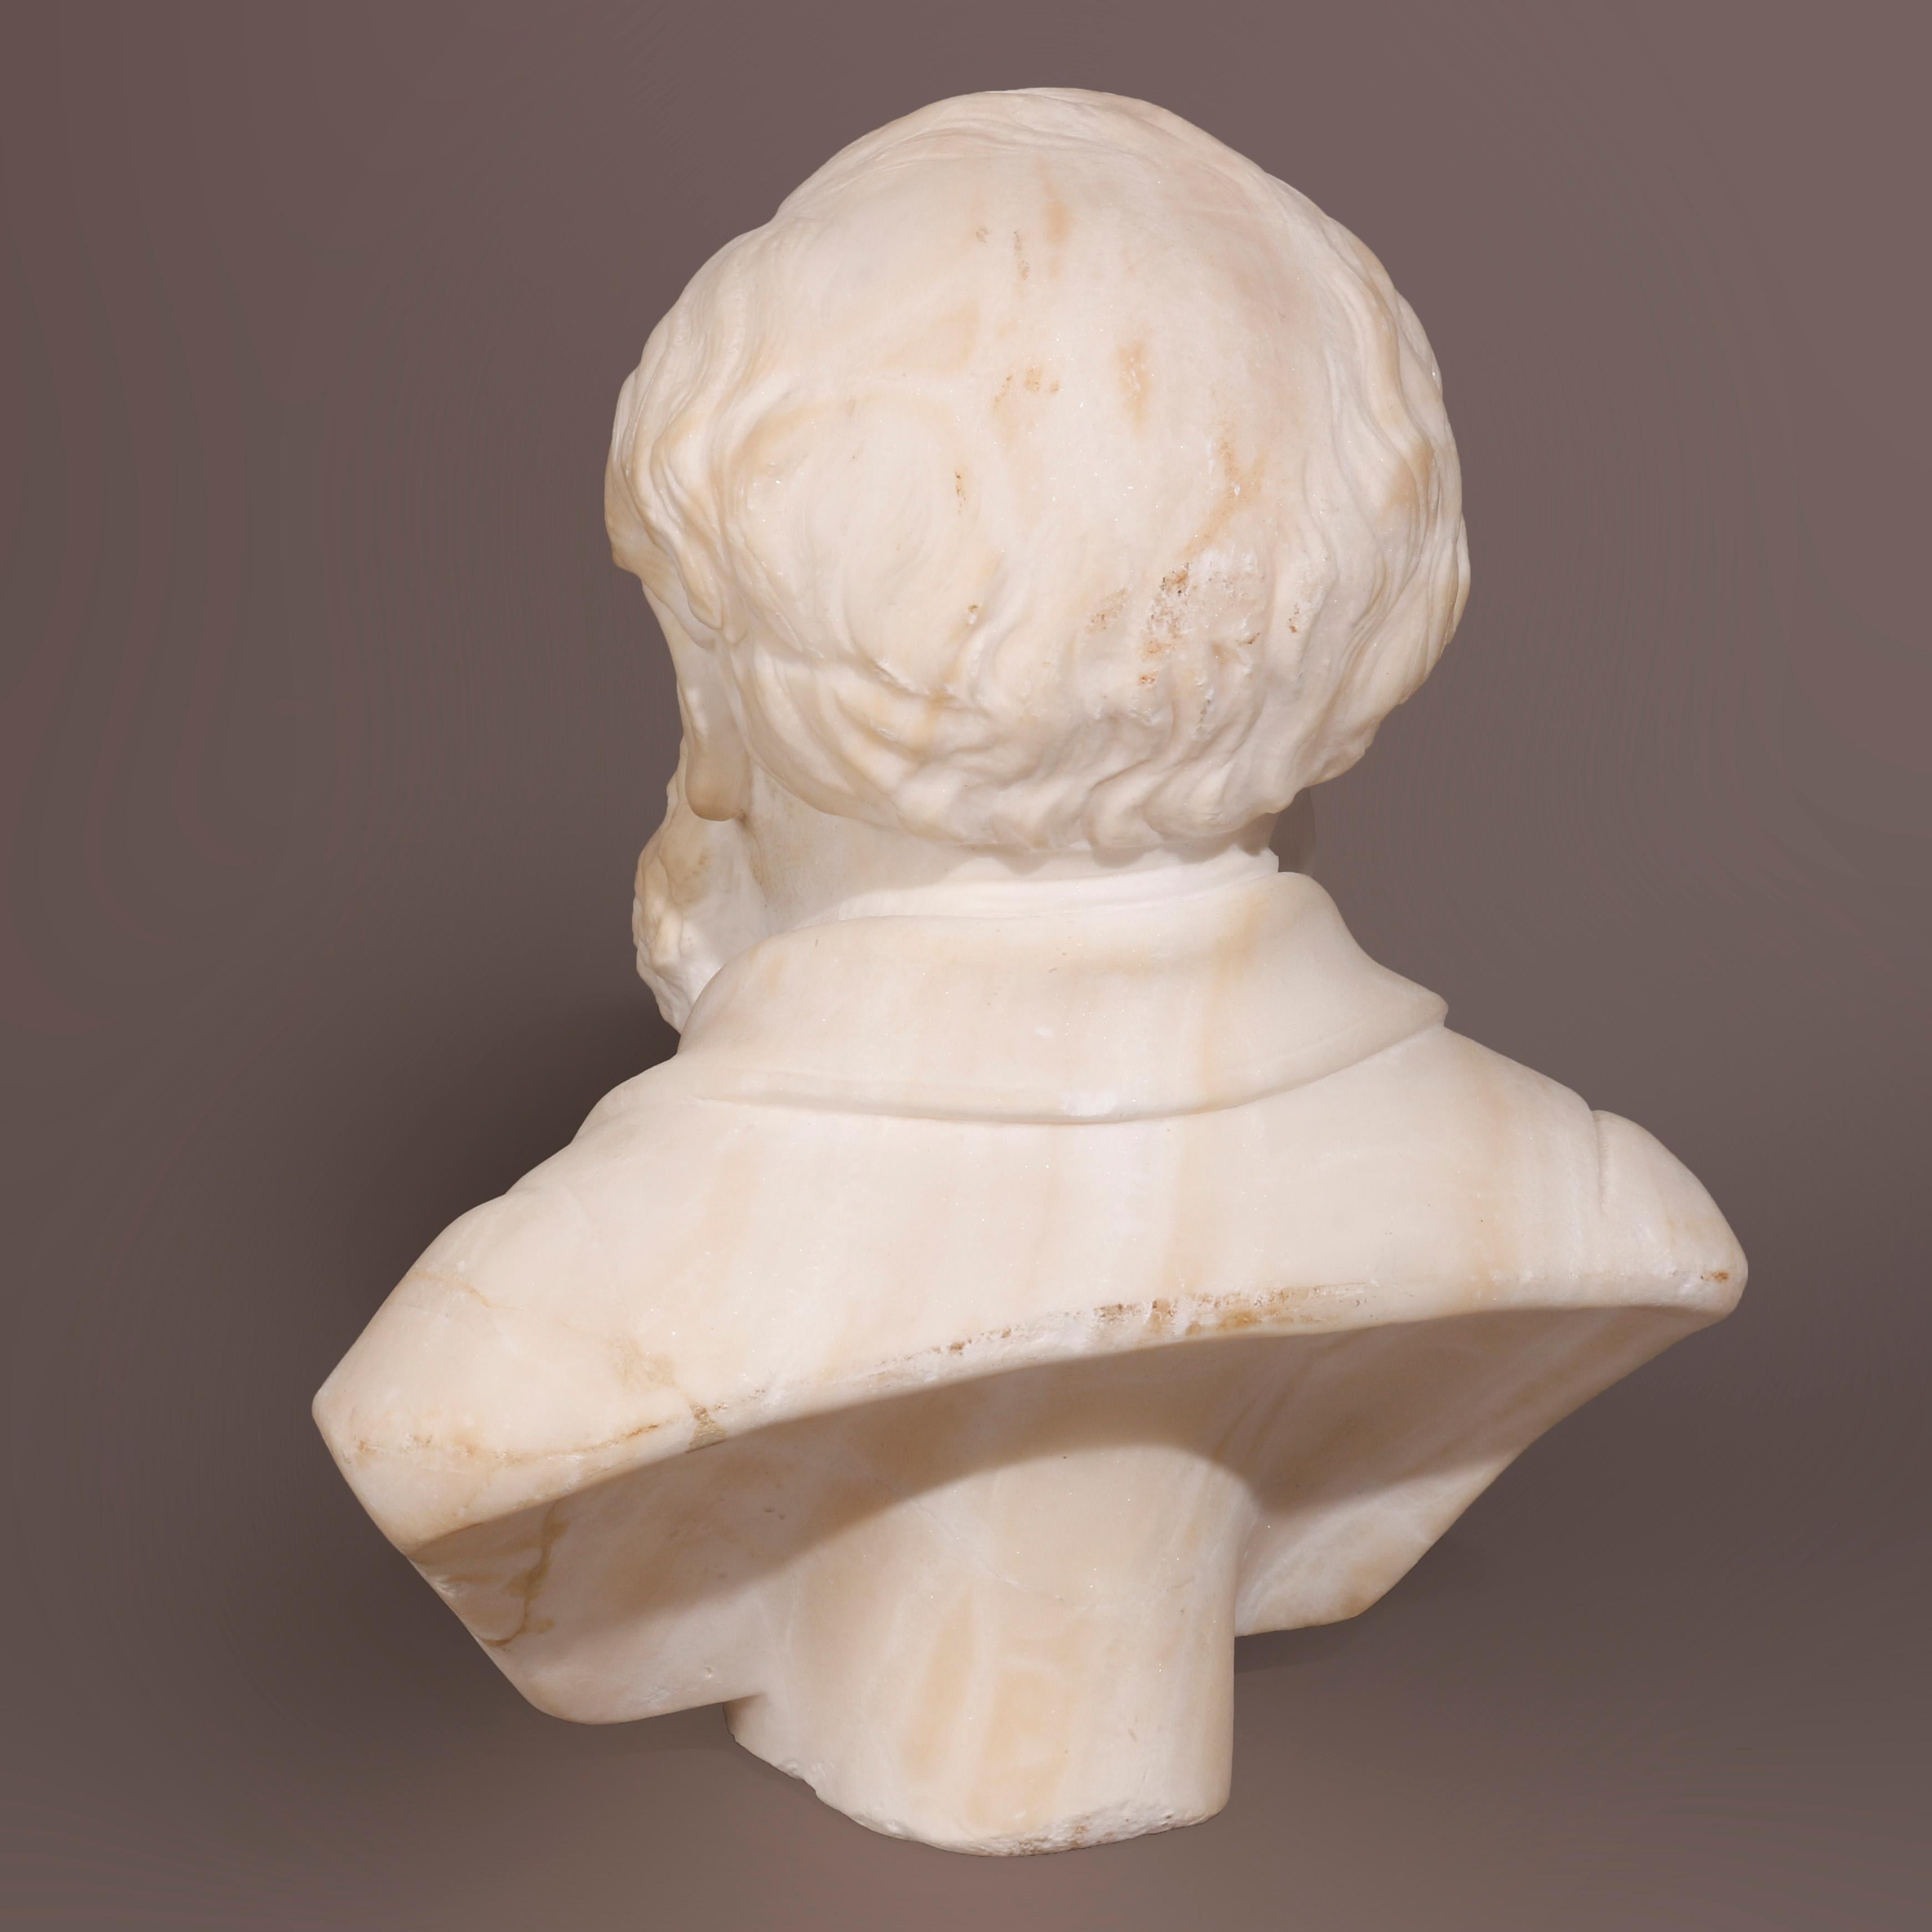 Antique Carved Alabaster Sculpture Portrait Bust of a Gentleman Scholar, c1890 4